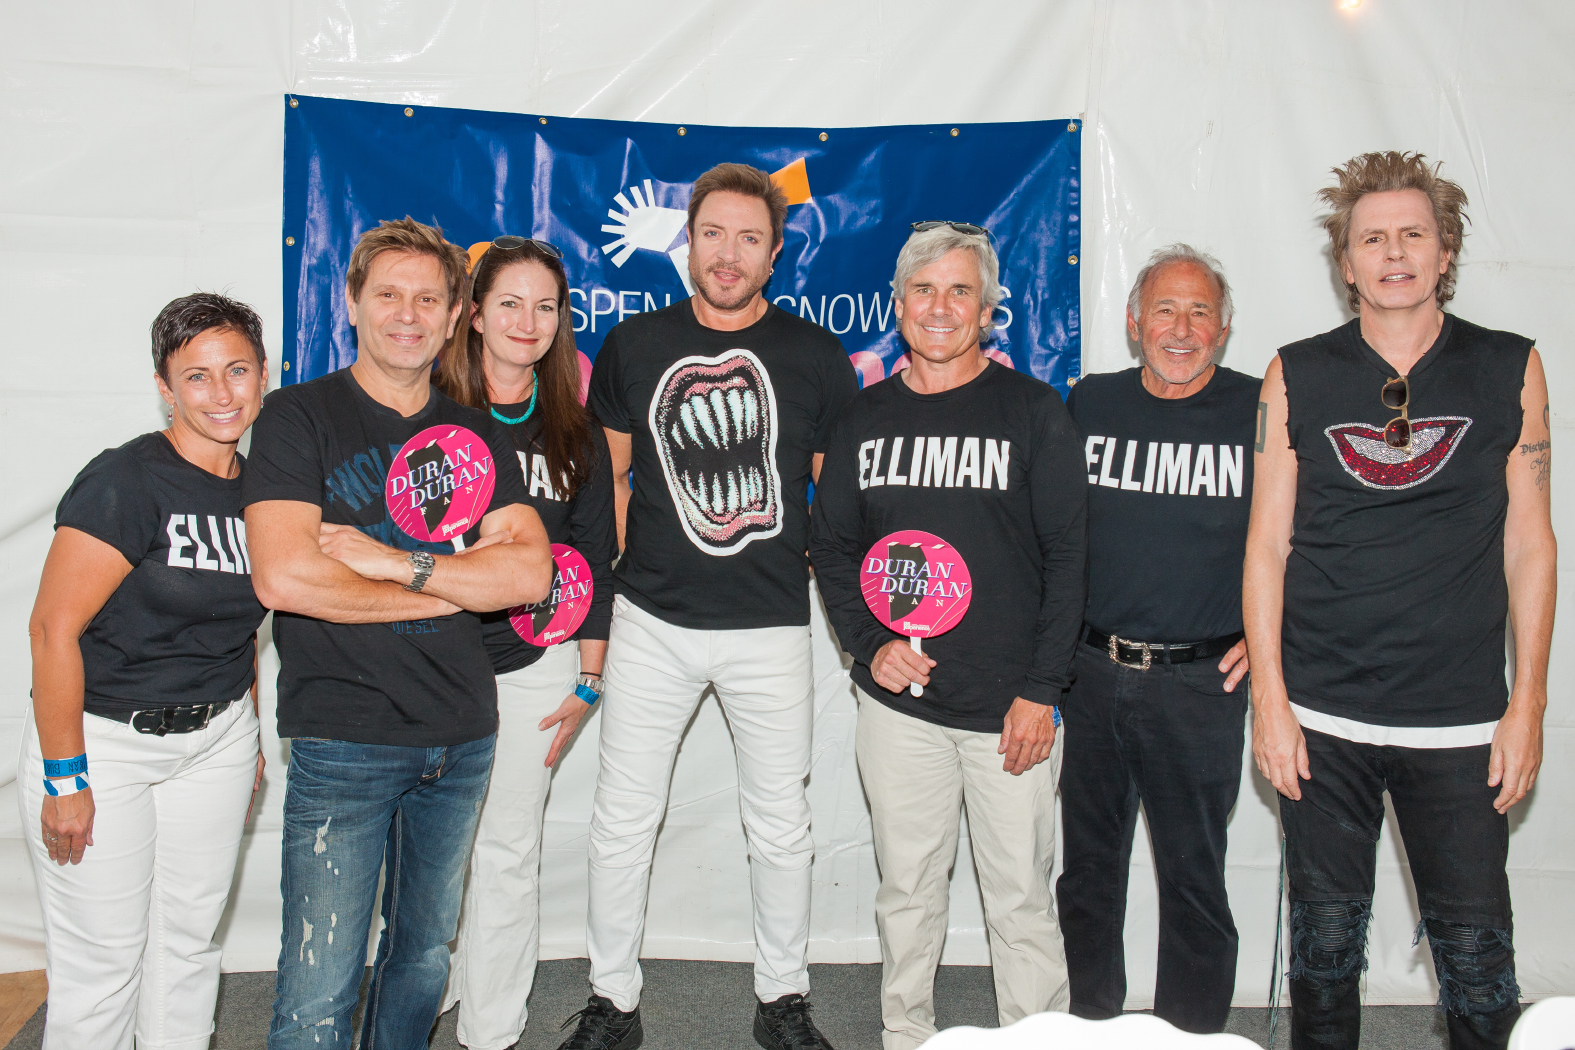 Elliman Colorado’s Lorie D’Alessio, Meanie Muss, Ed Foran and Joshua Saslove with Duran Duran.